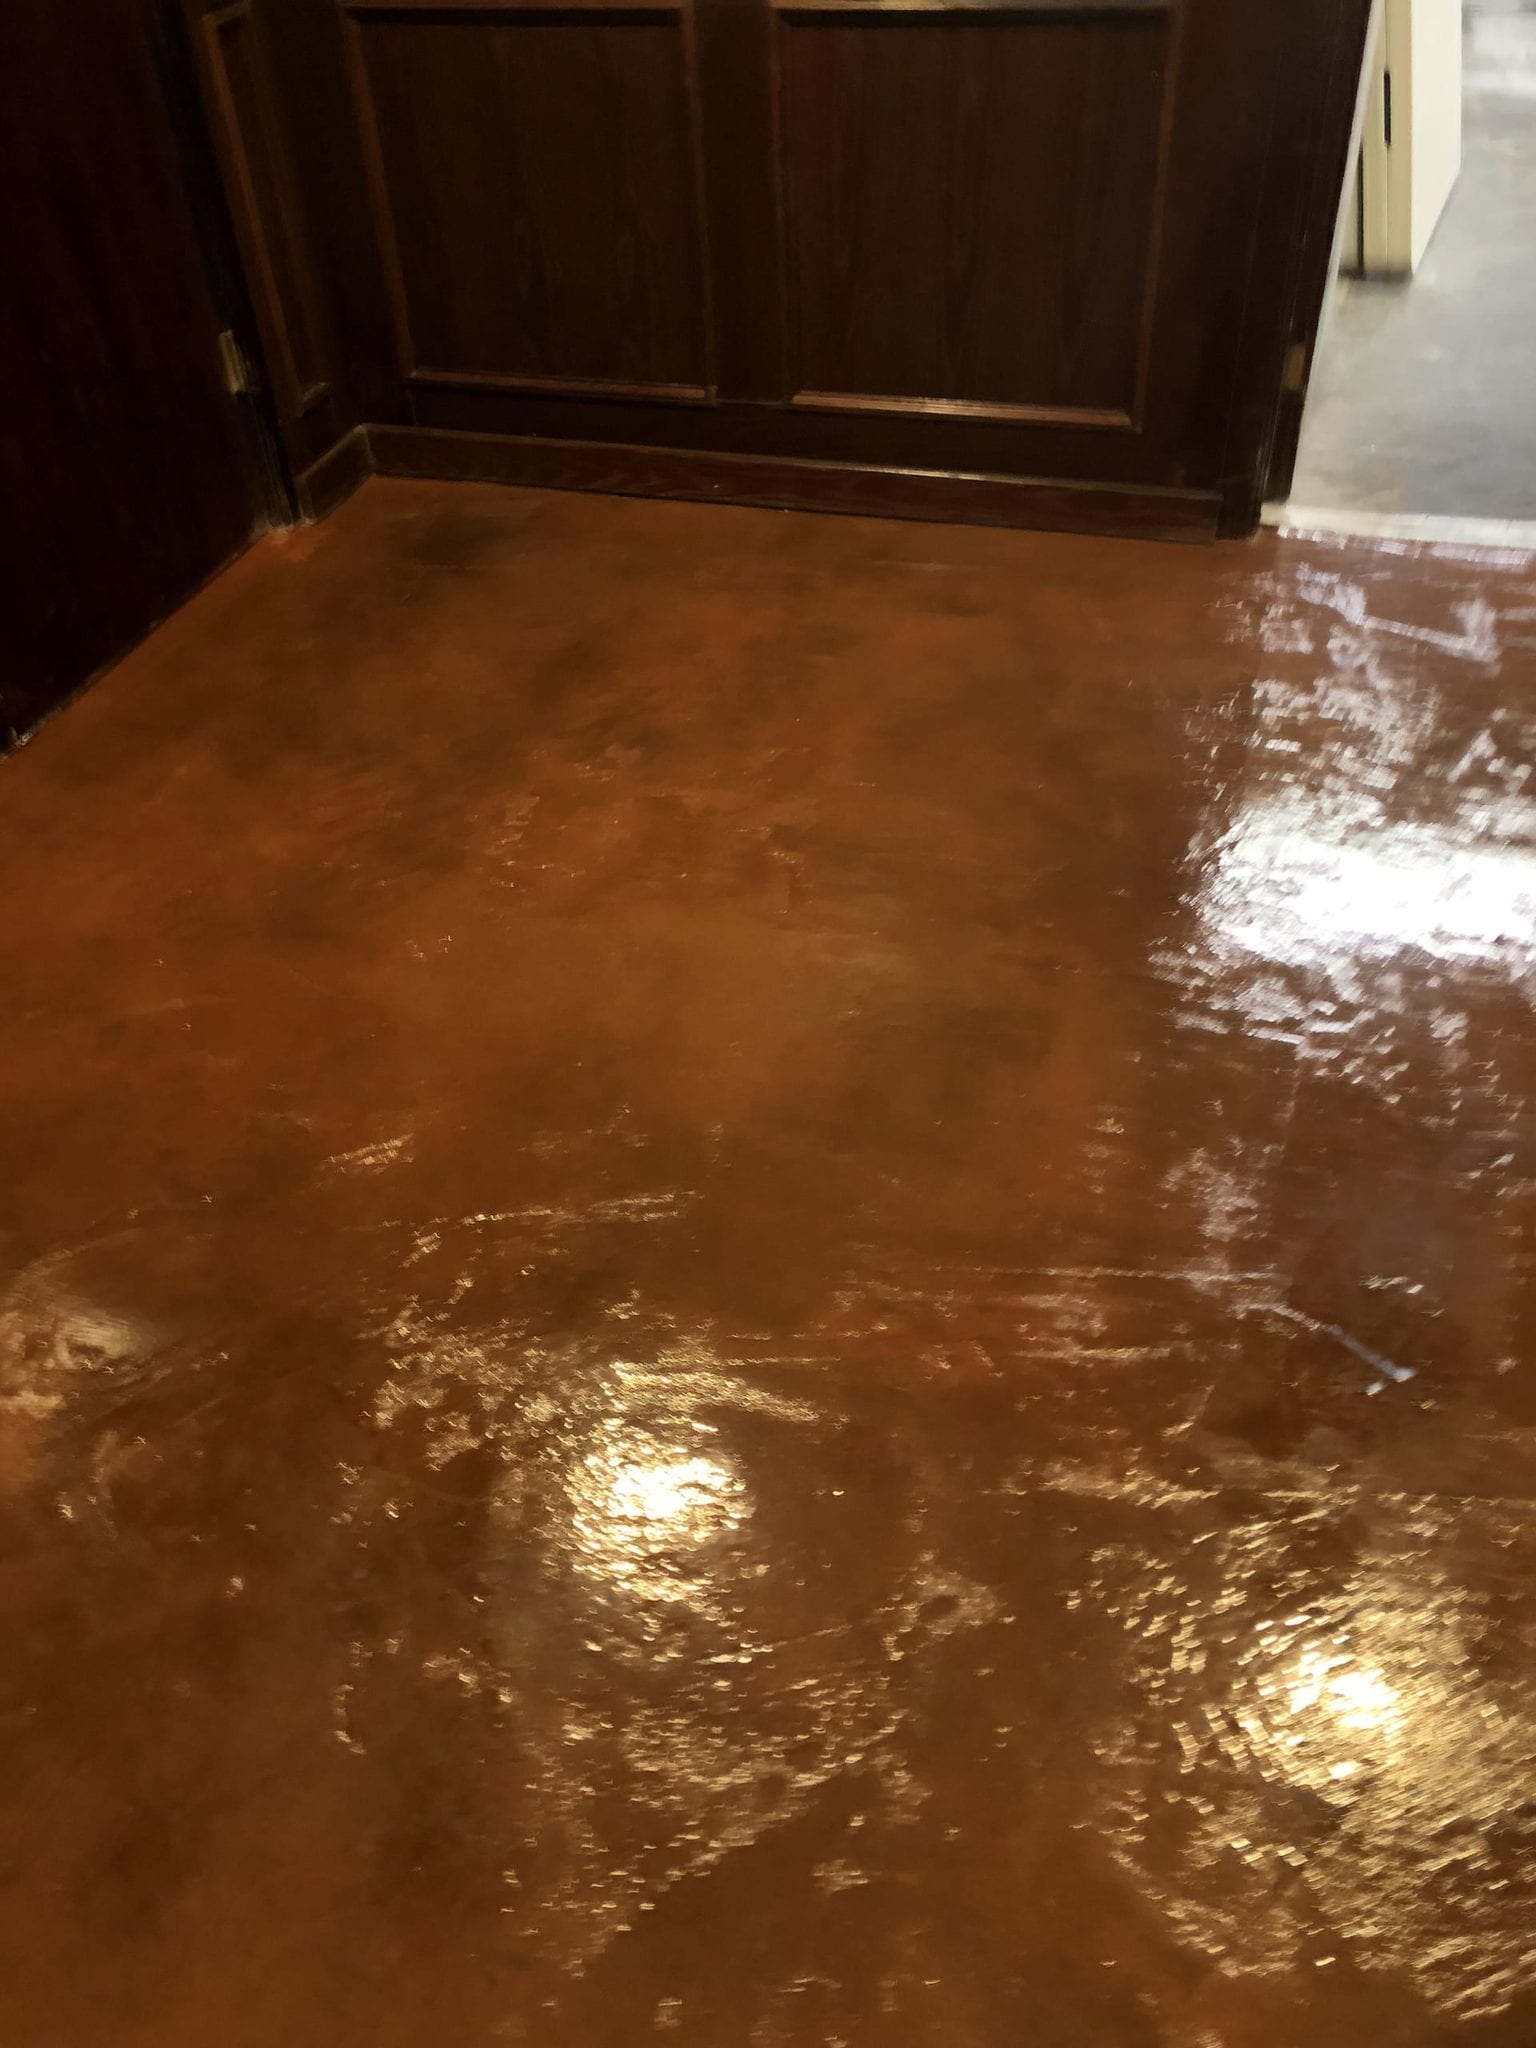 near bar shiny concrete floor restored by servant industries